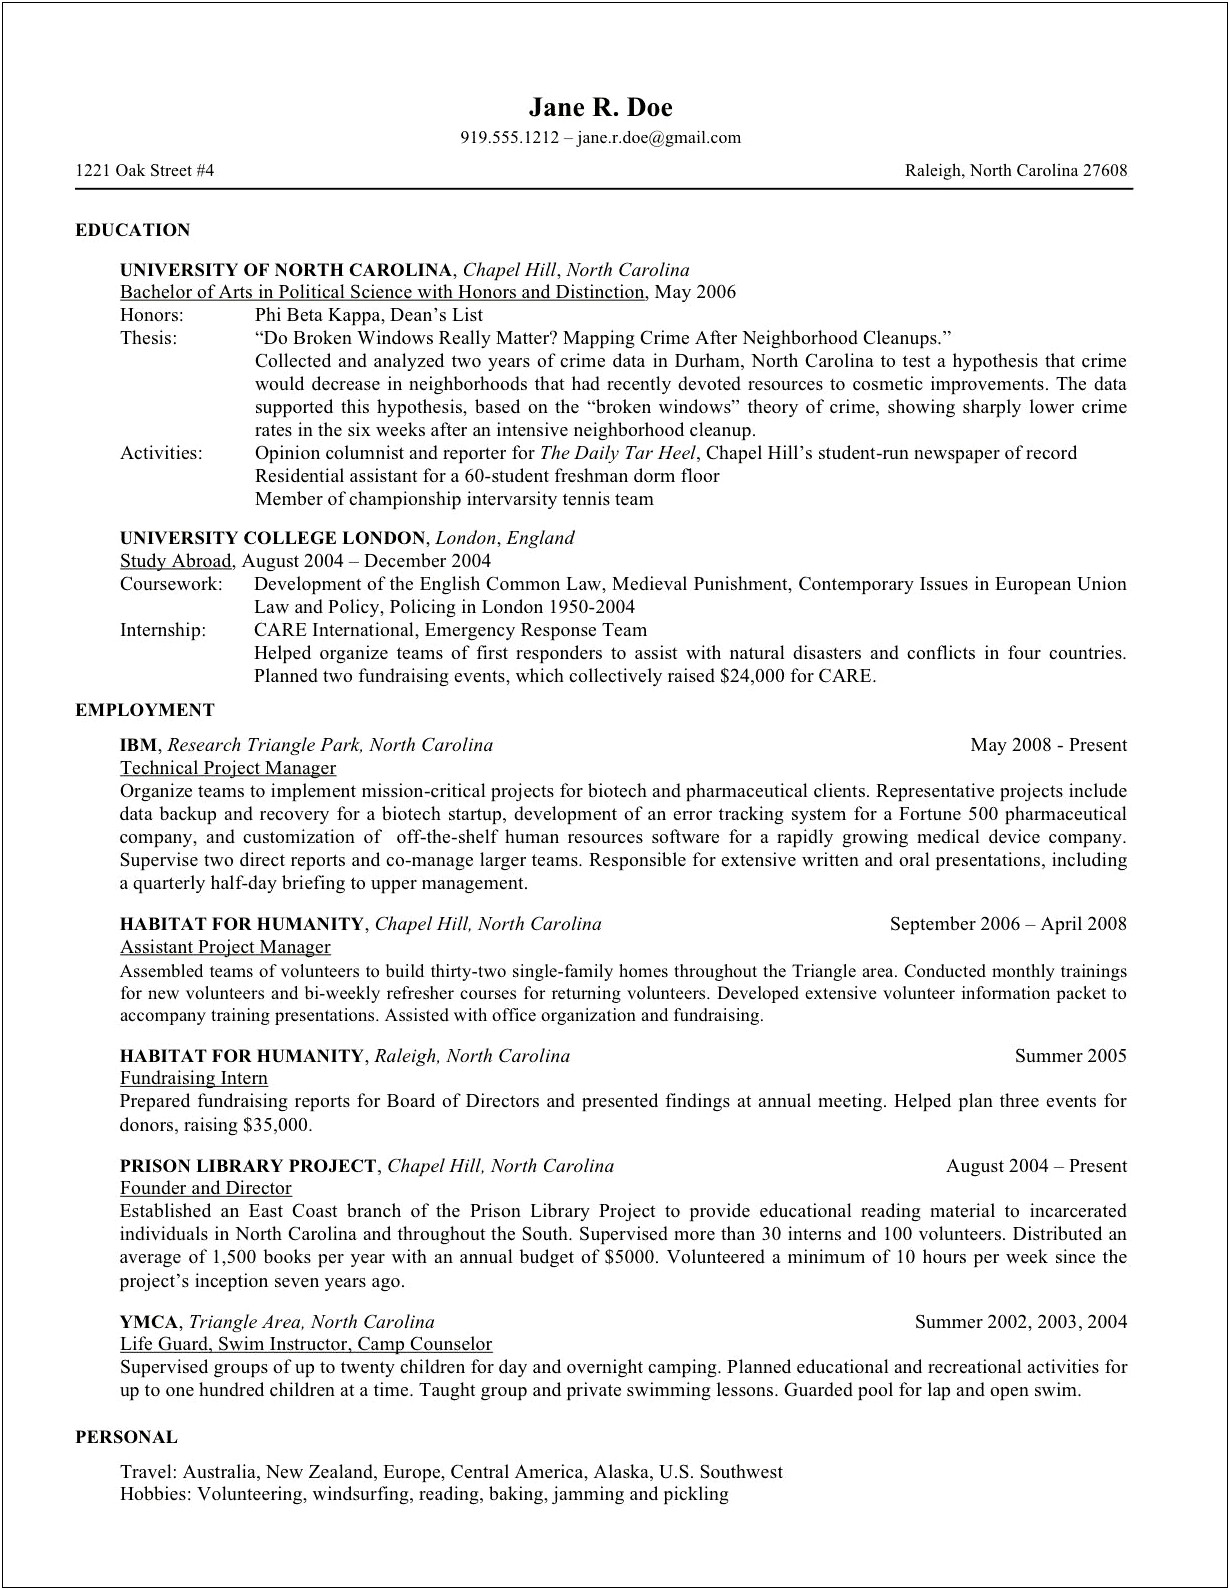 Resume Description For Habitat For Humanity